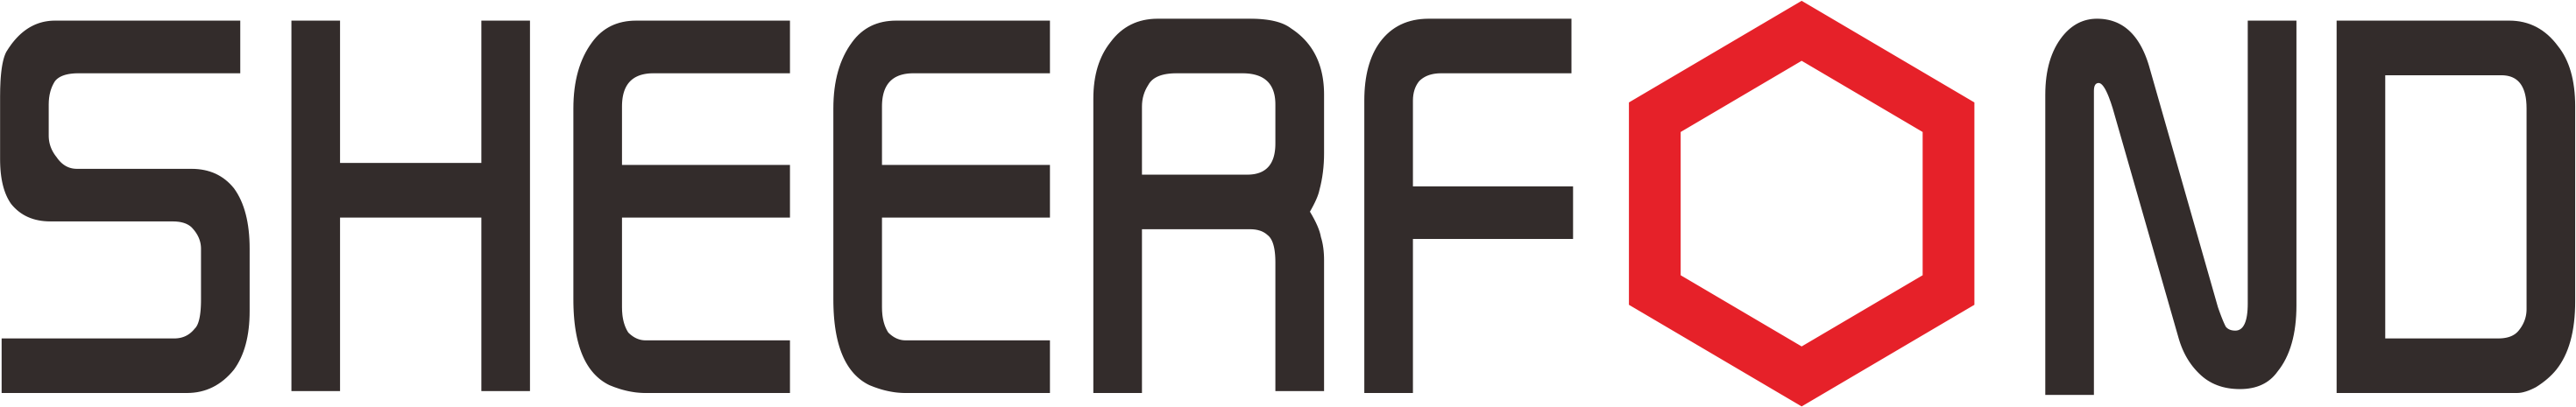 sheerfond-logo